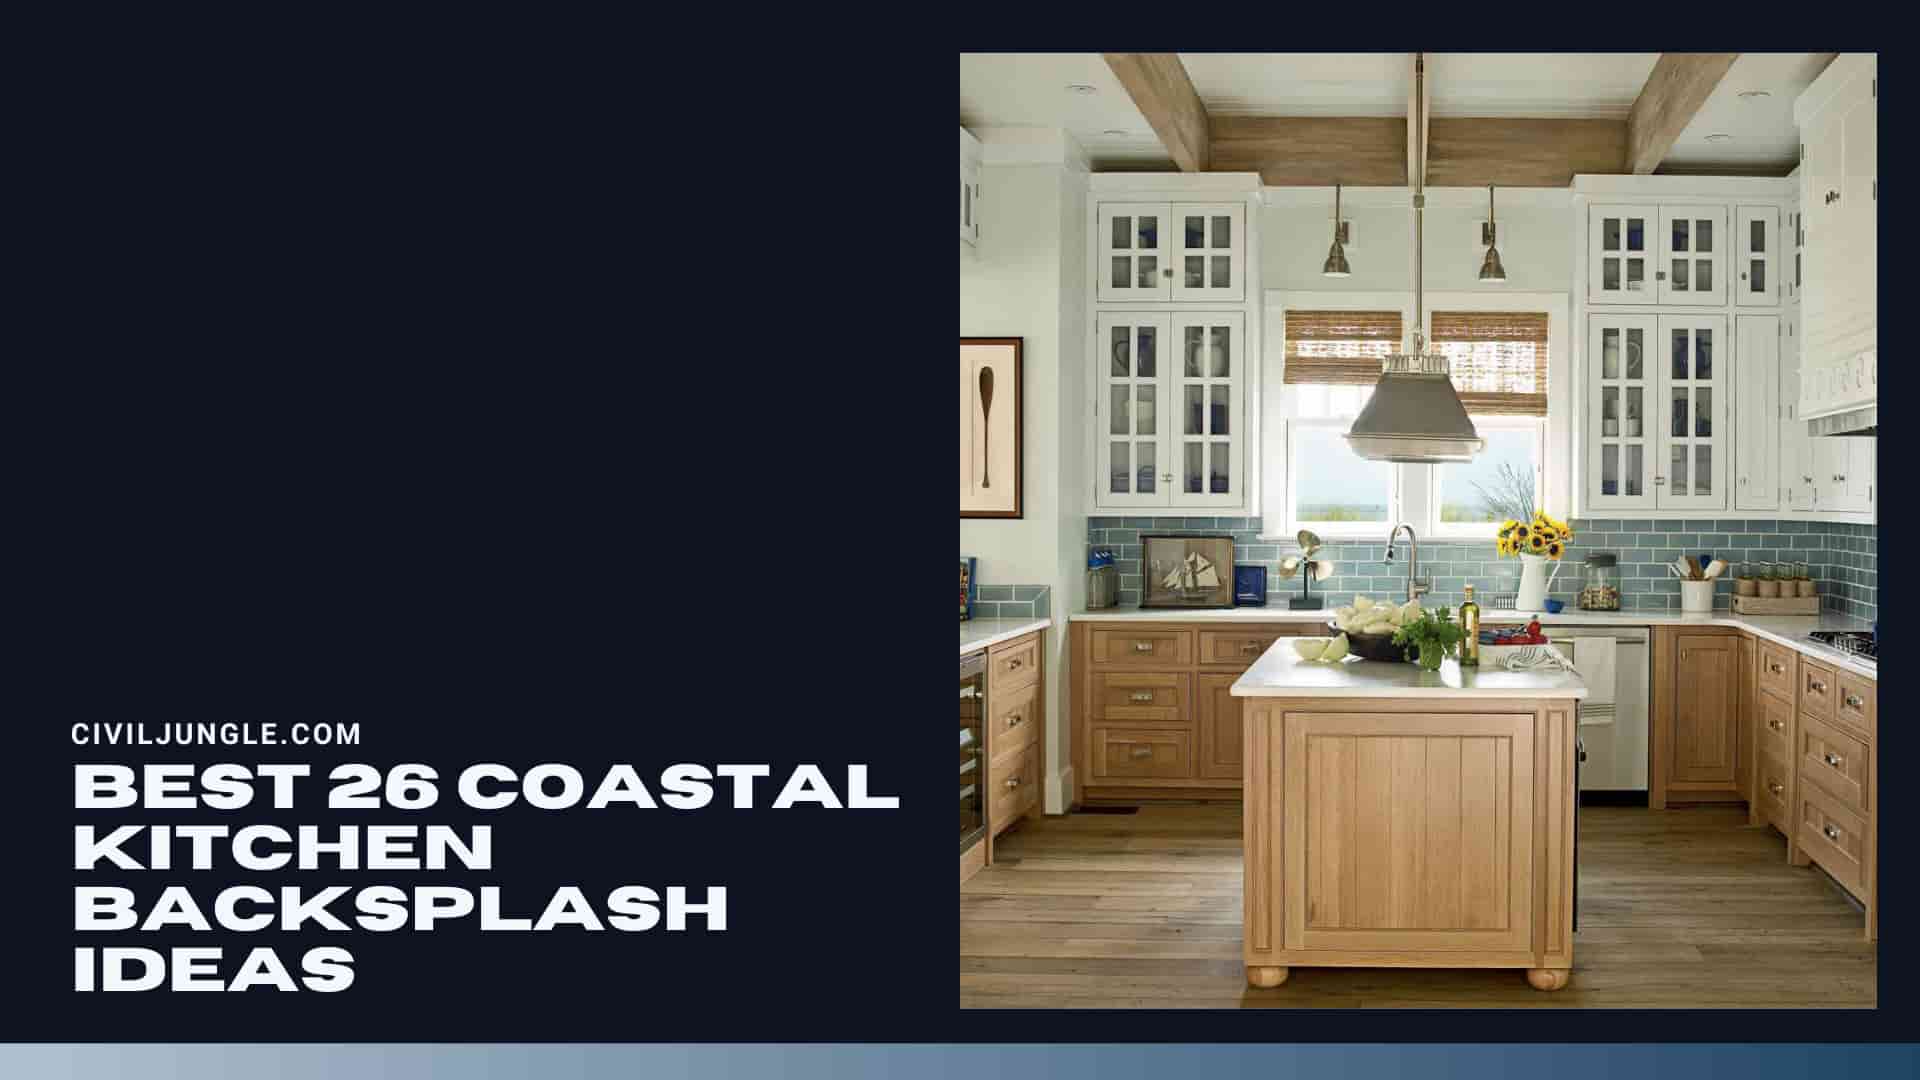 Best 26 Coastal Kitchen Backsplash Ideas